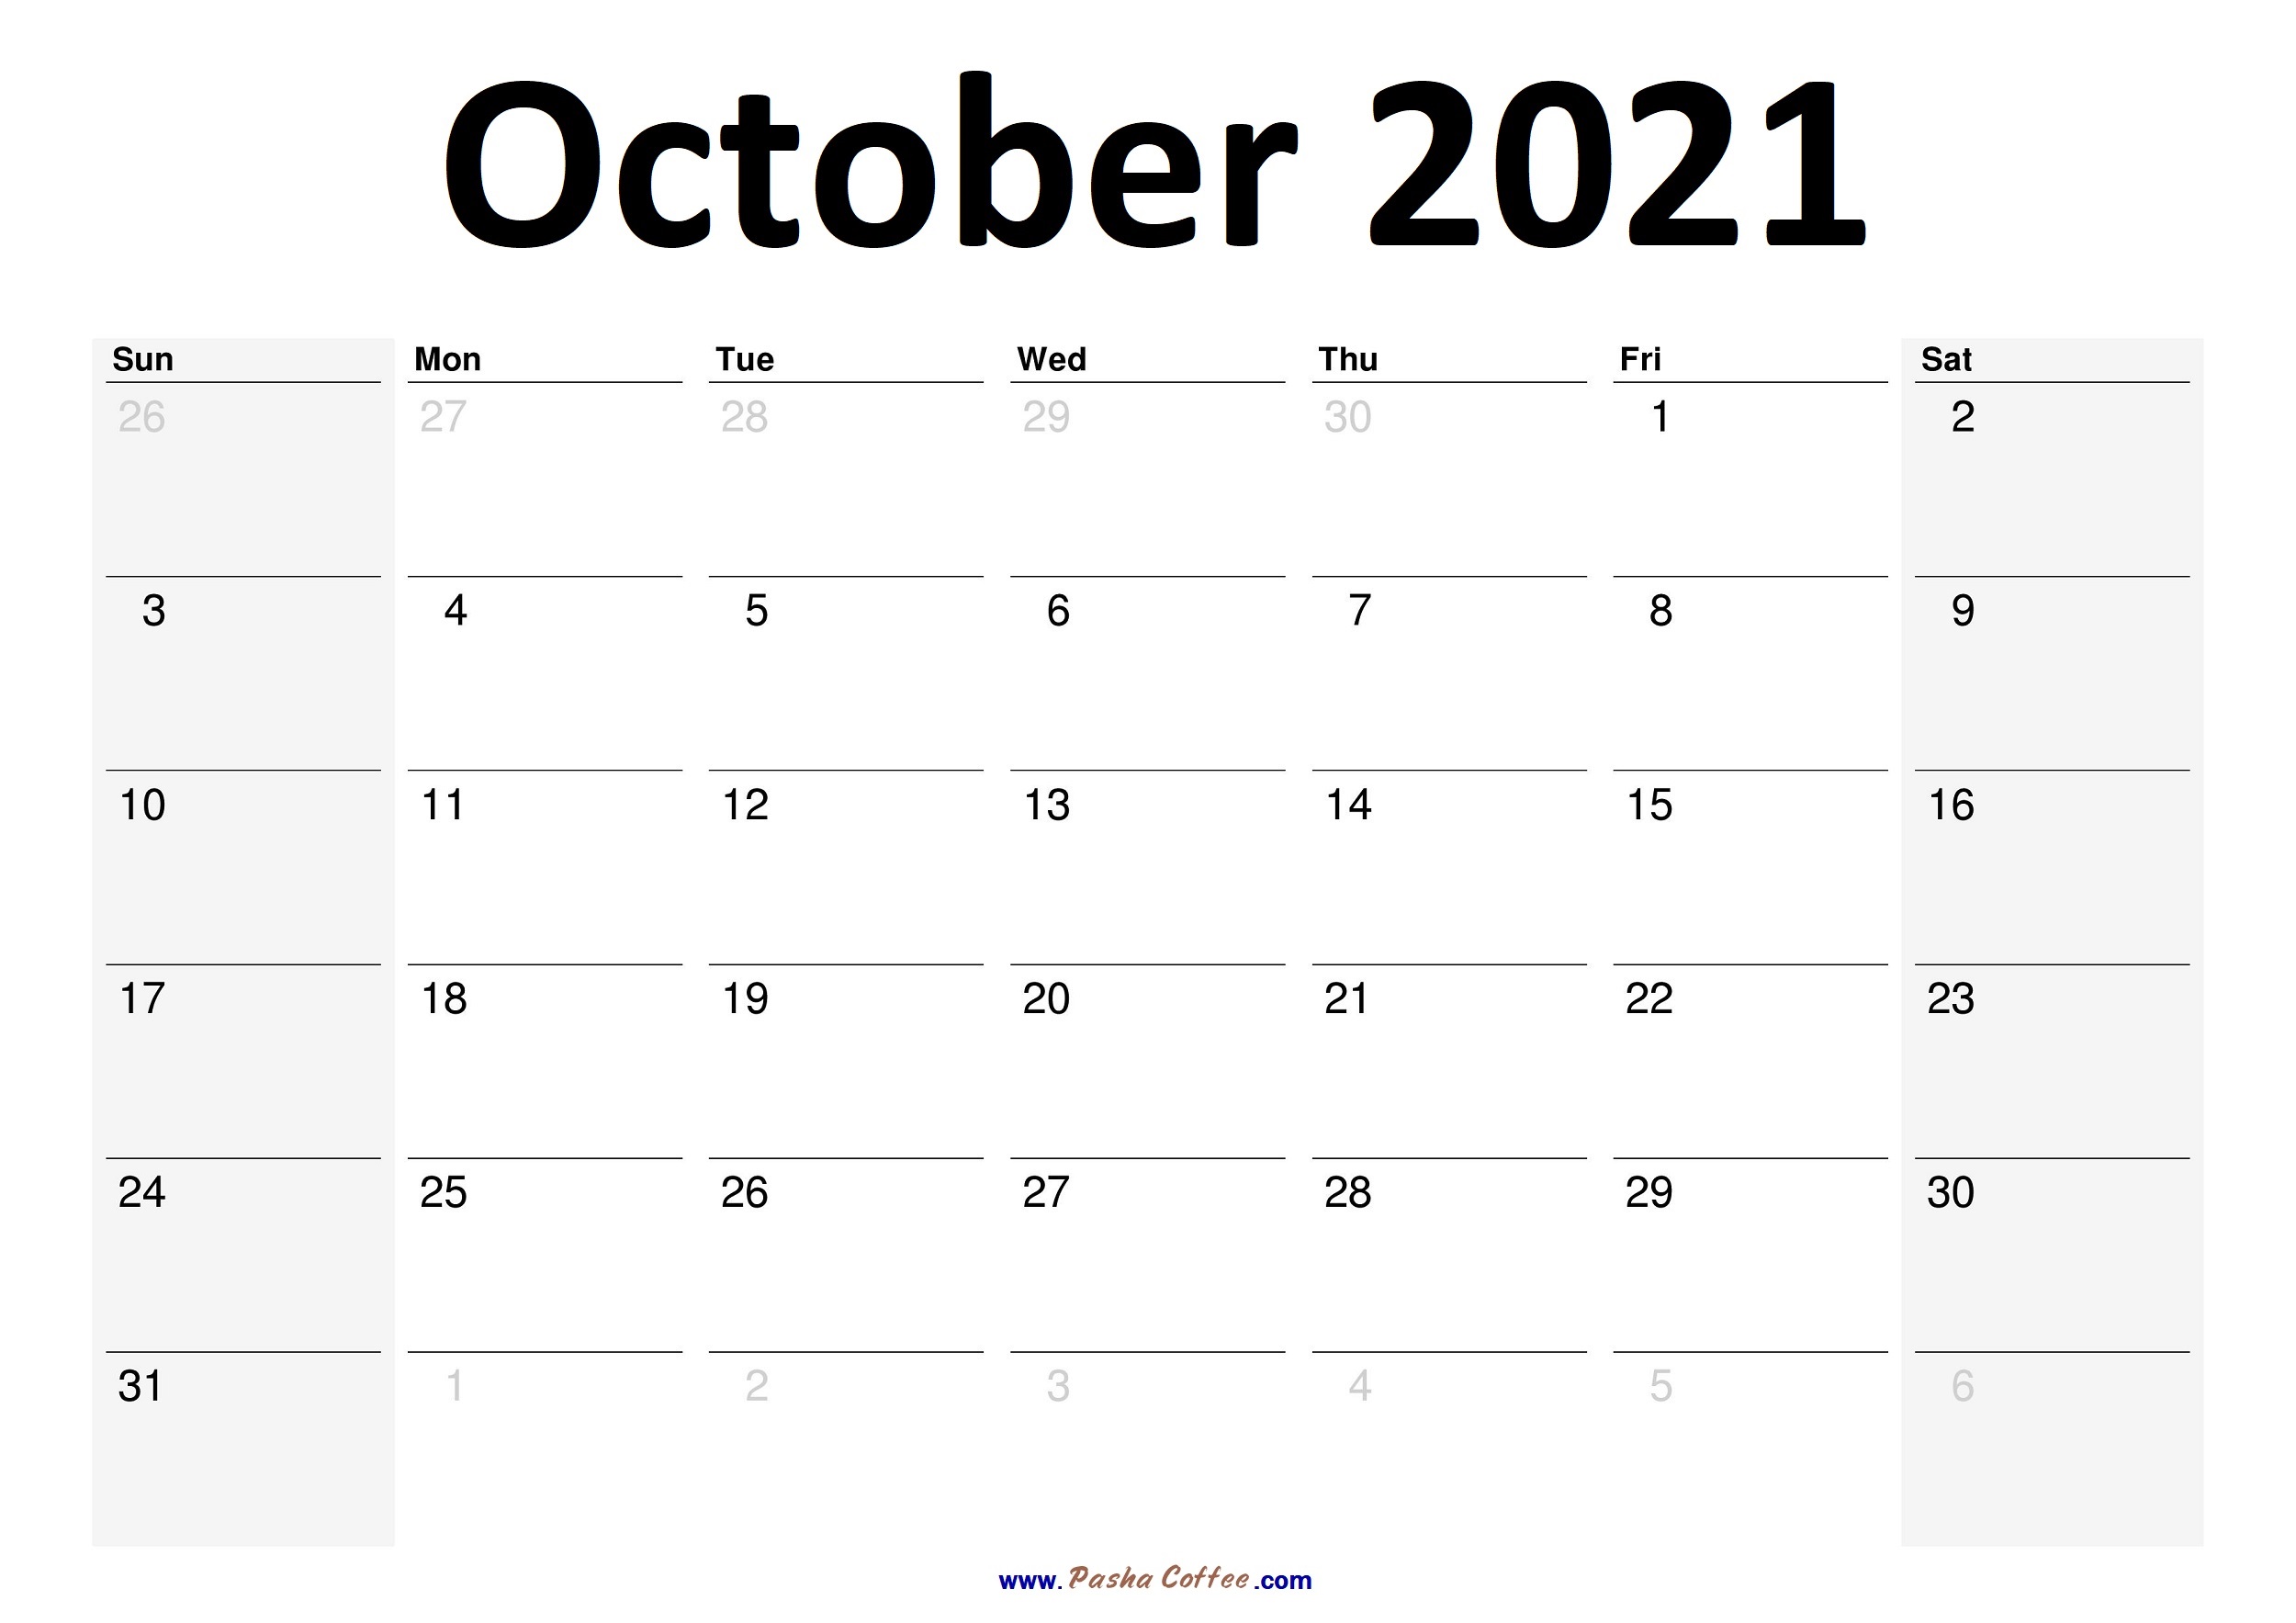 2021-October-Calendar-Planner01